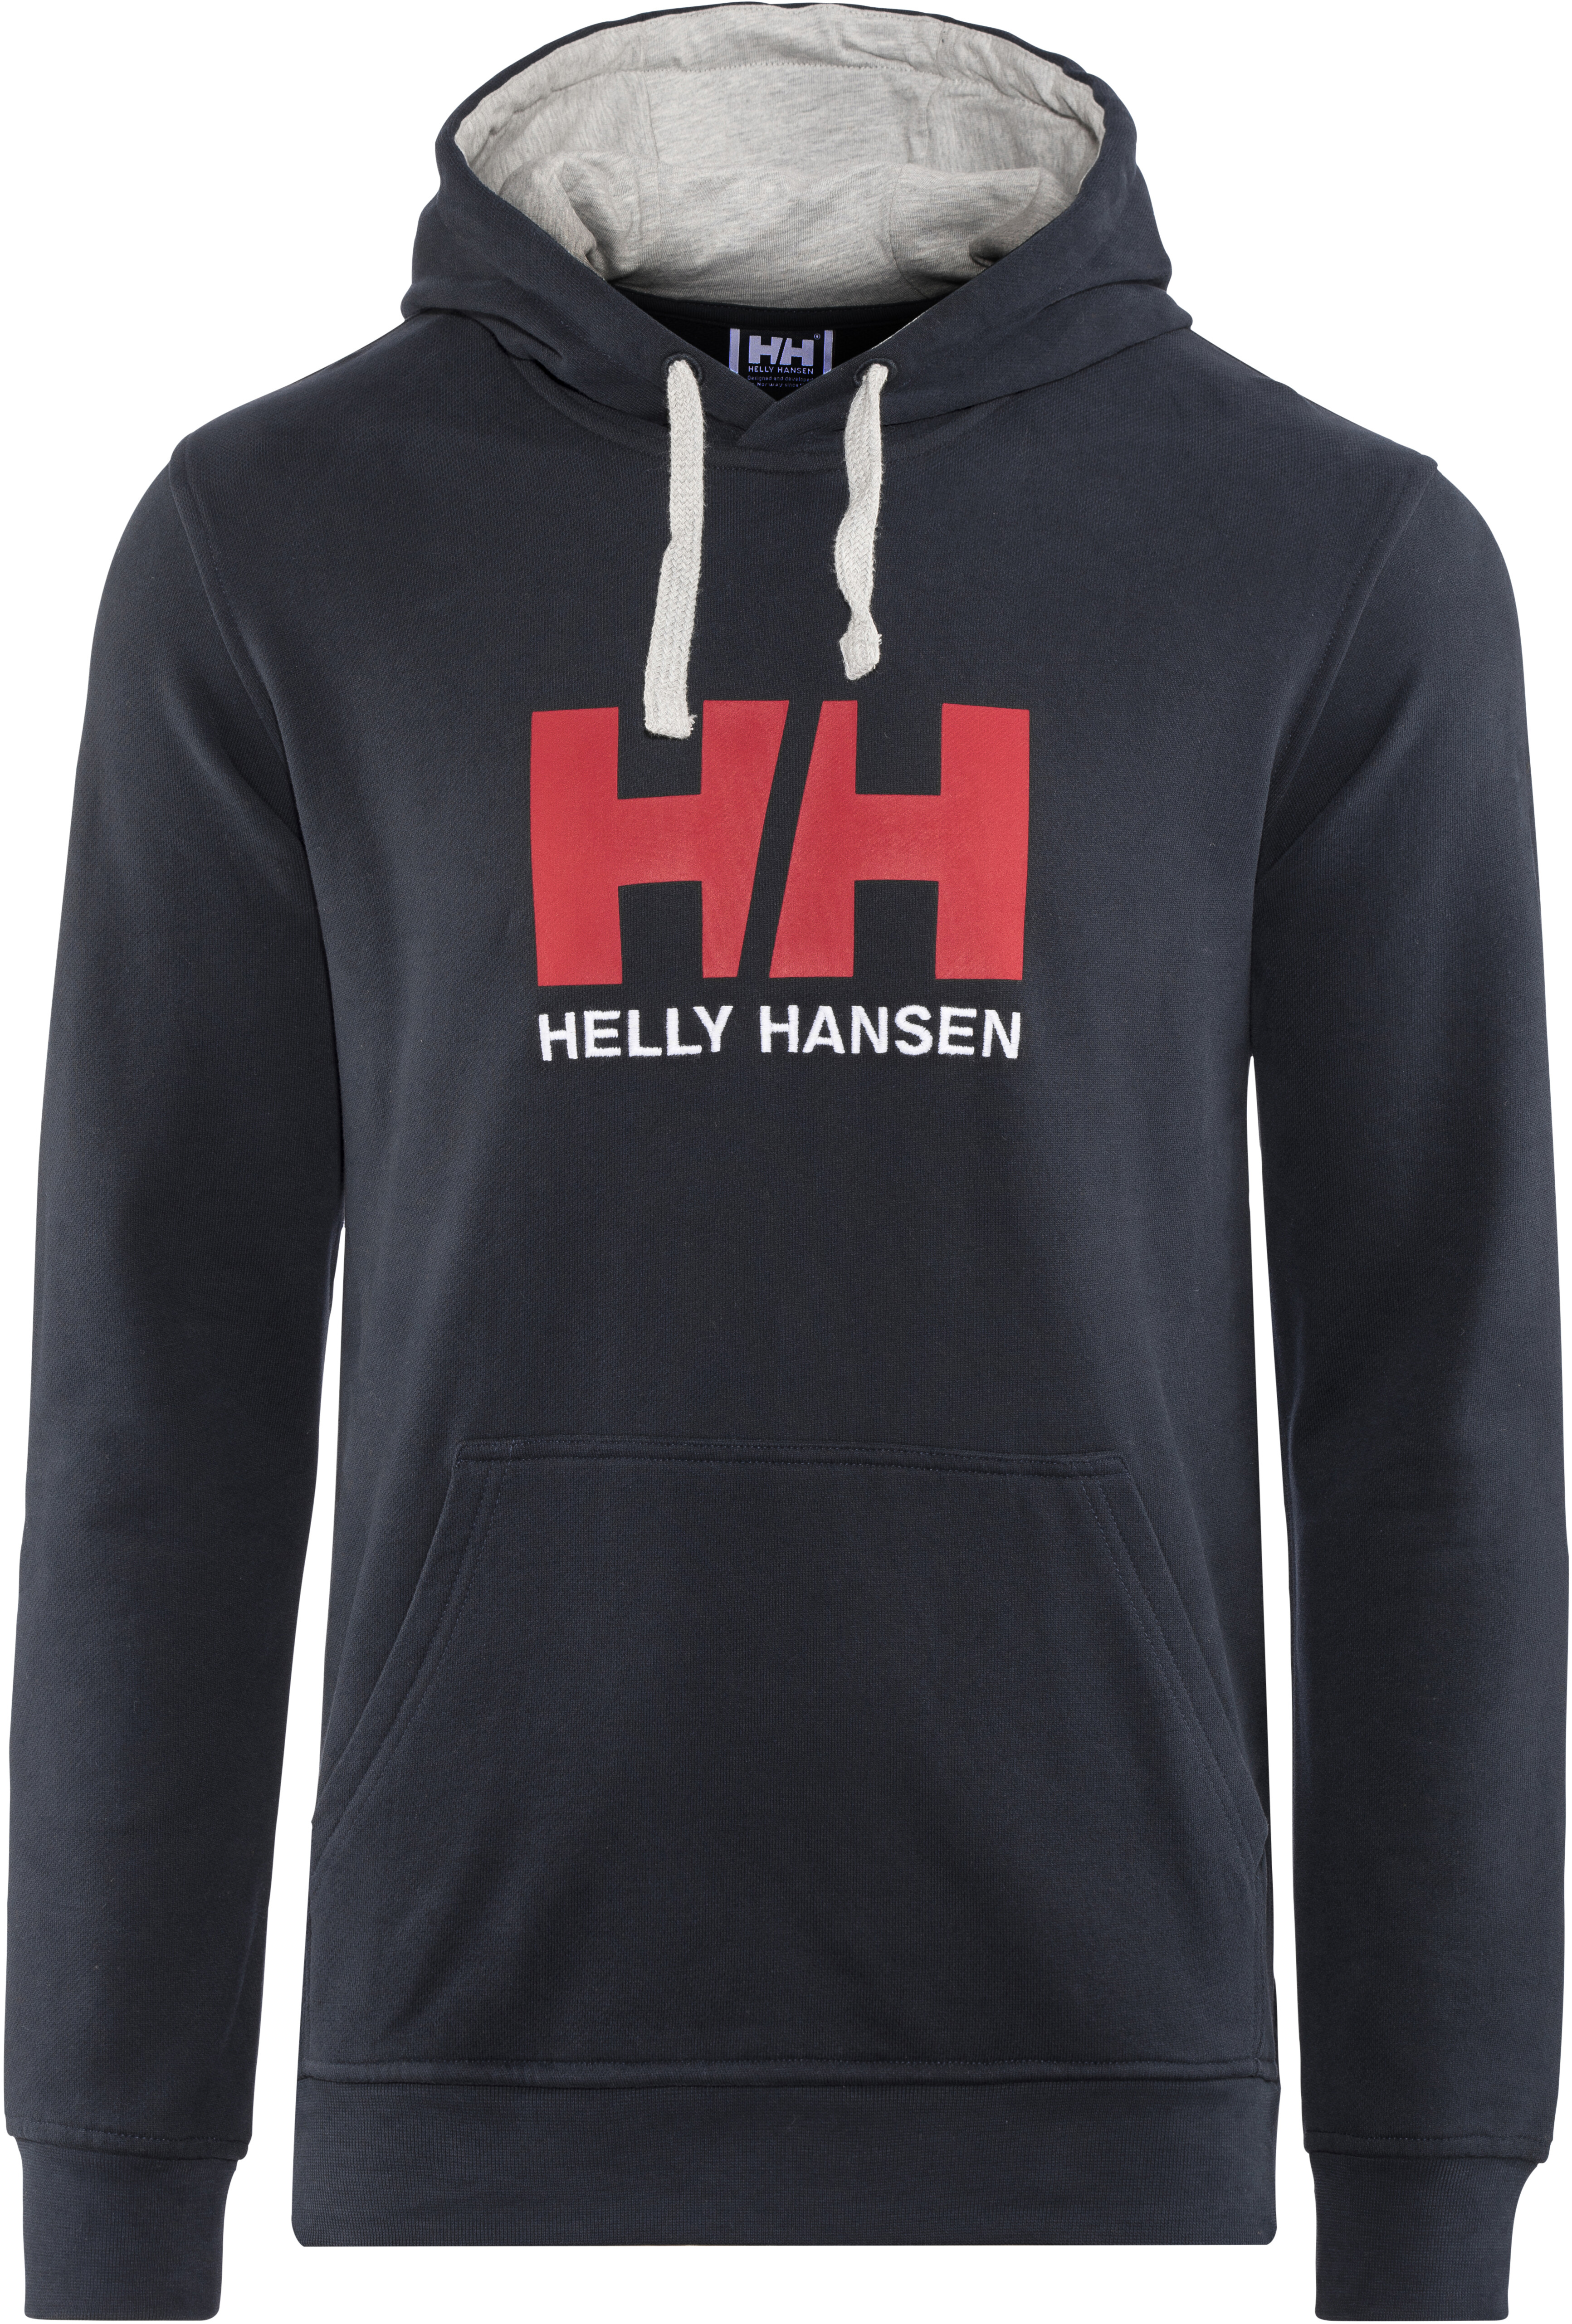 Helly Hansen HH Logo Hoodie Men navy at addnature.co.uk